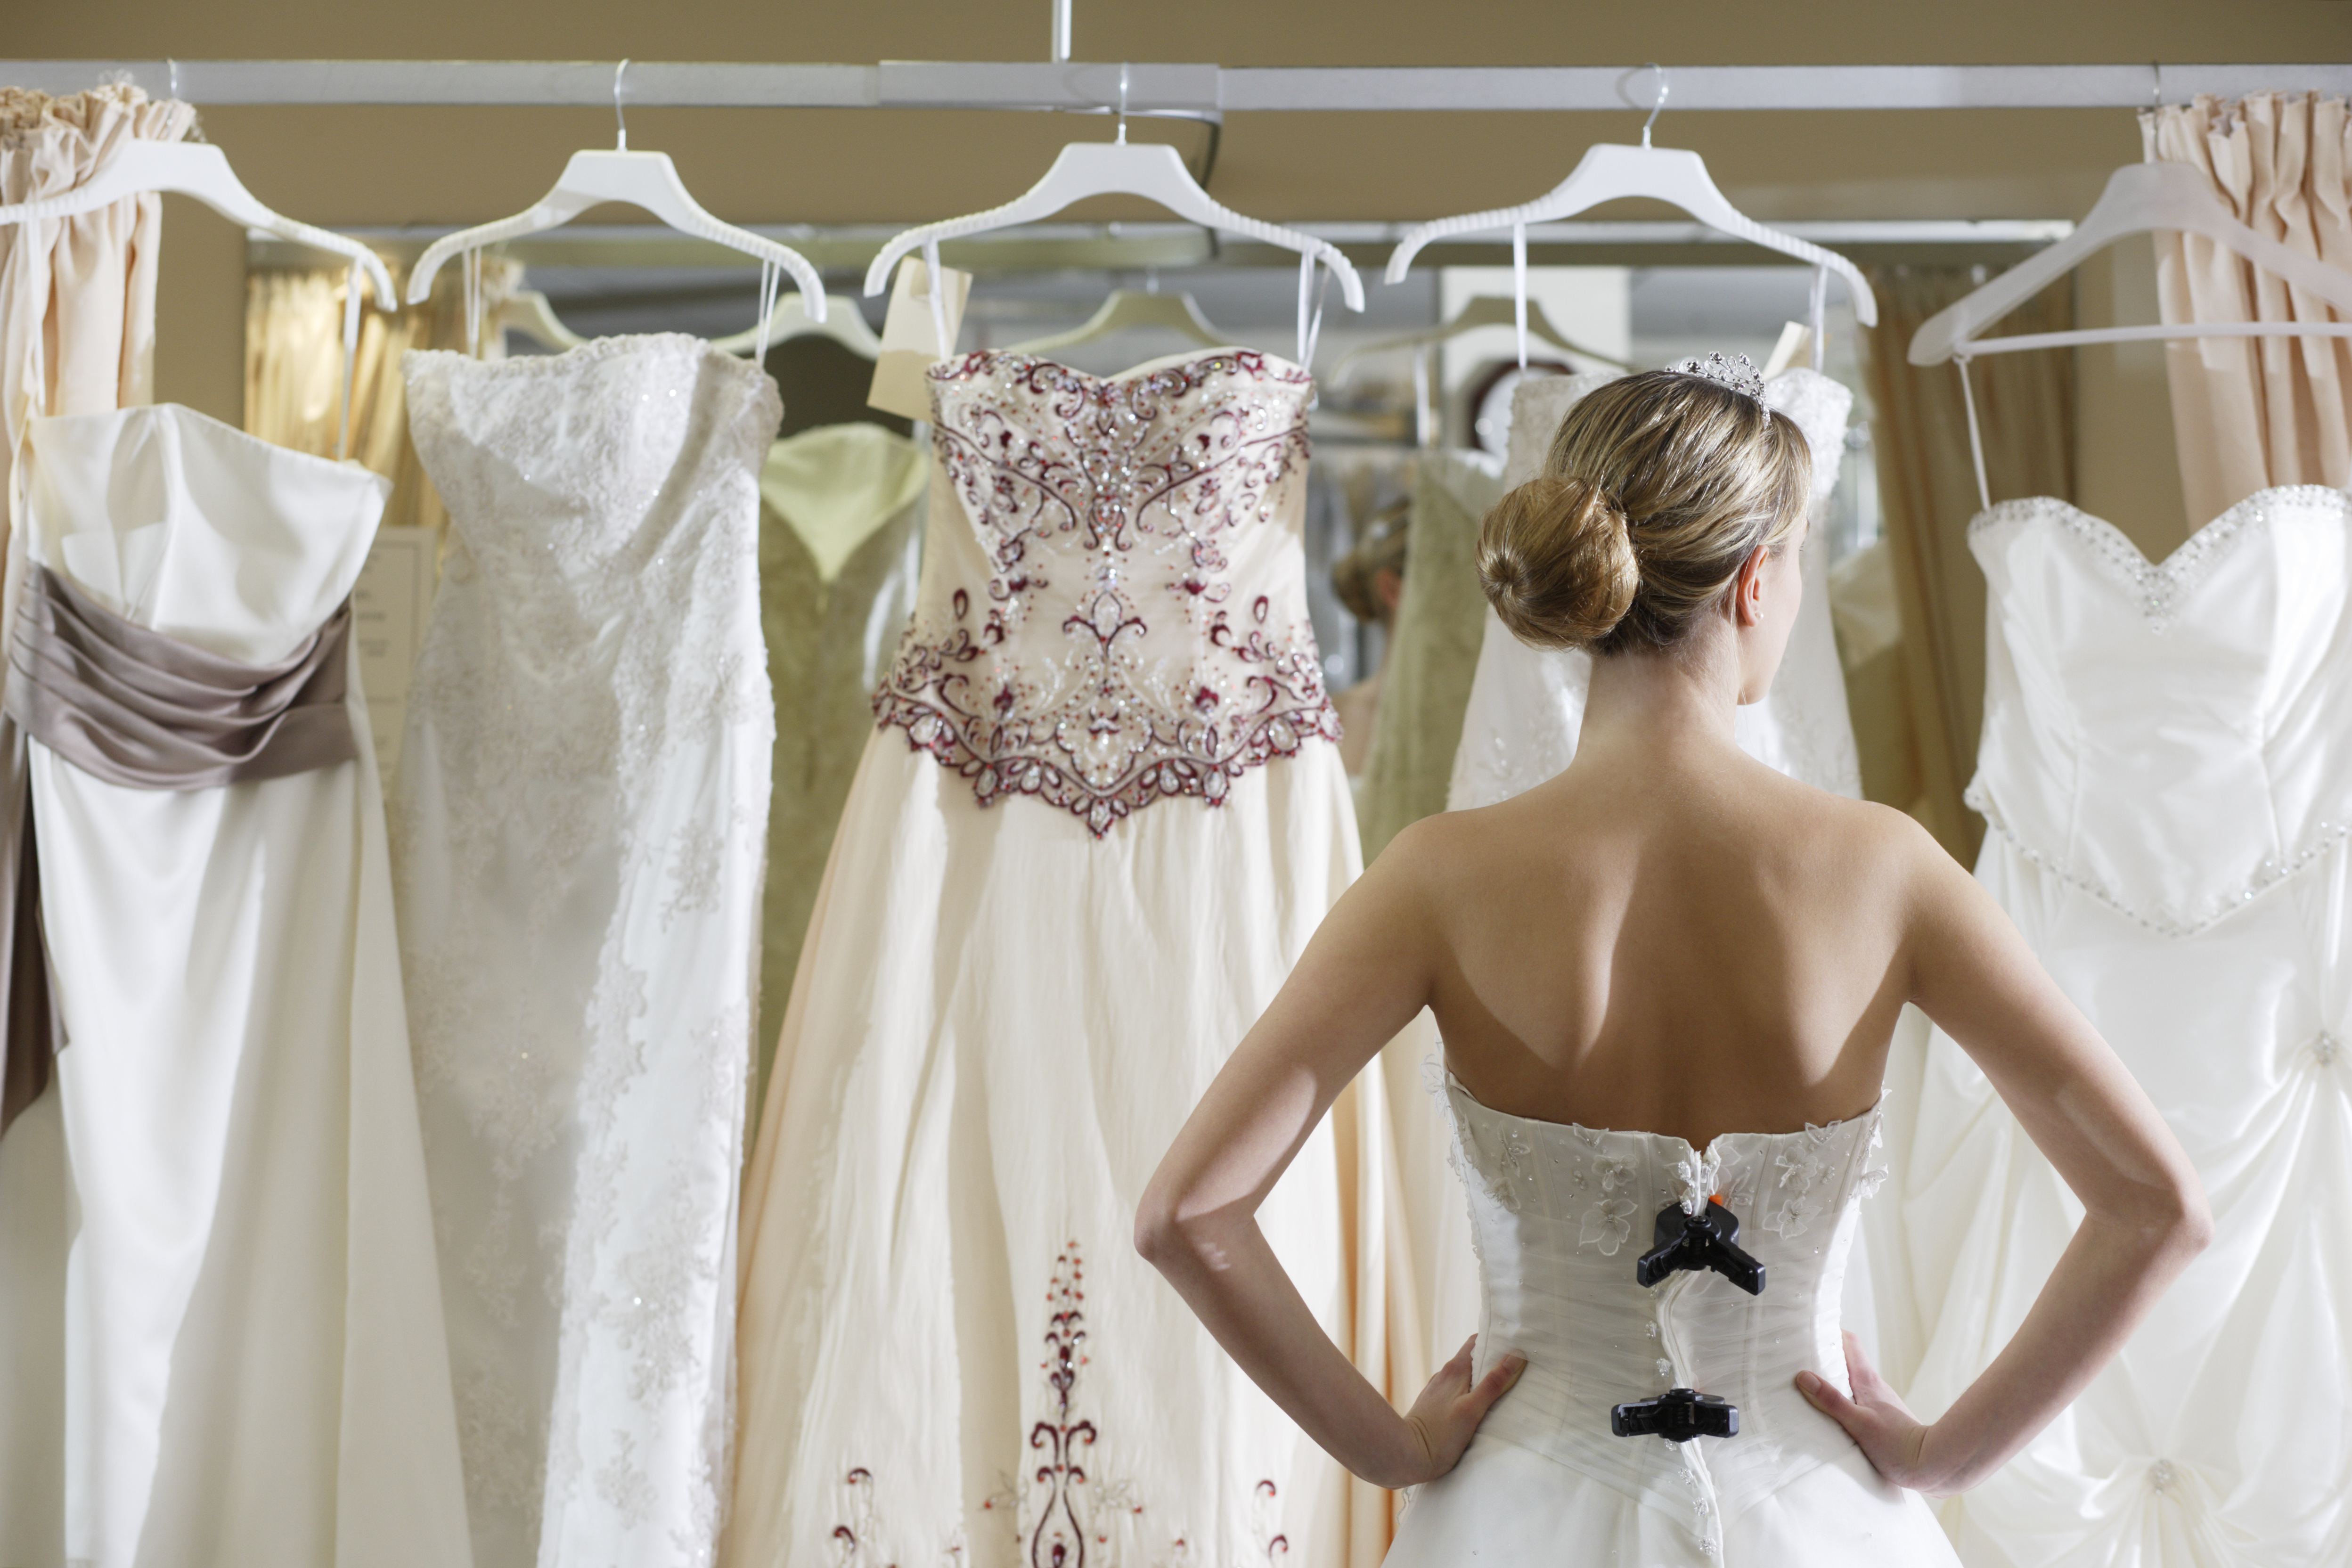 average bridal dress cost